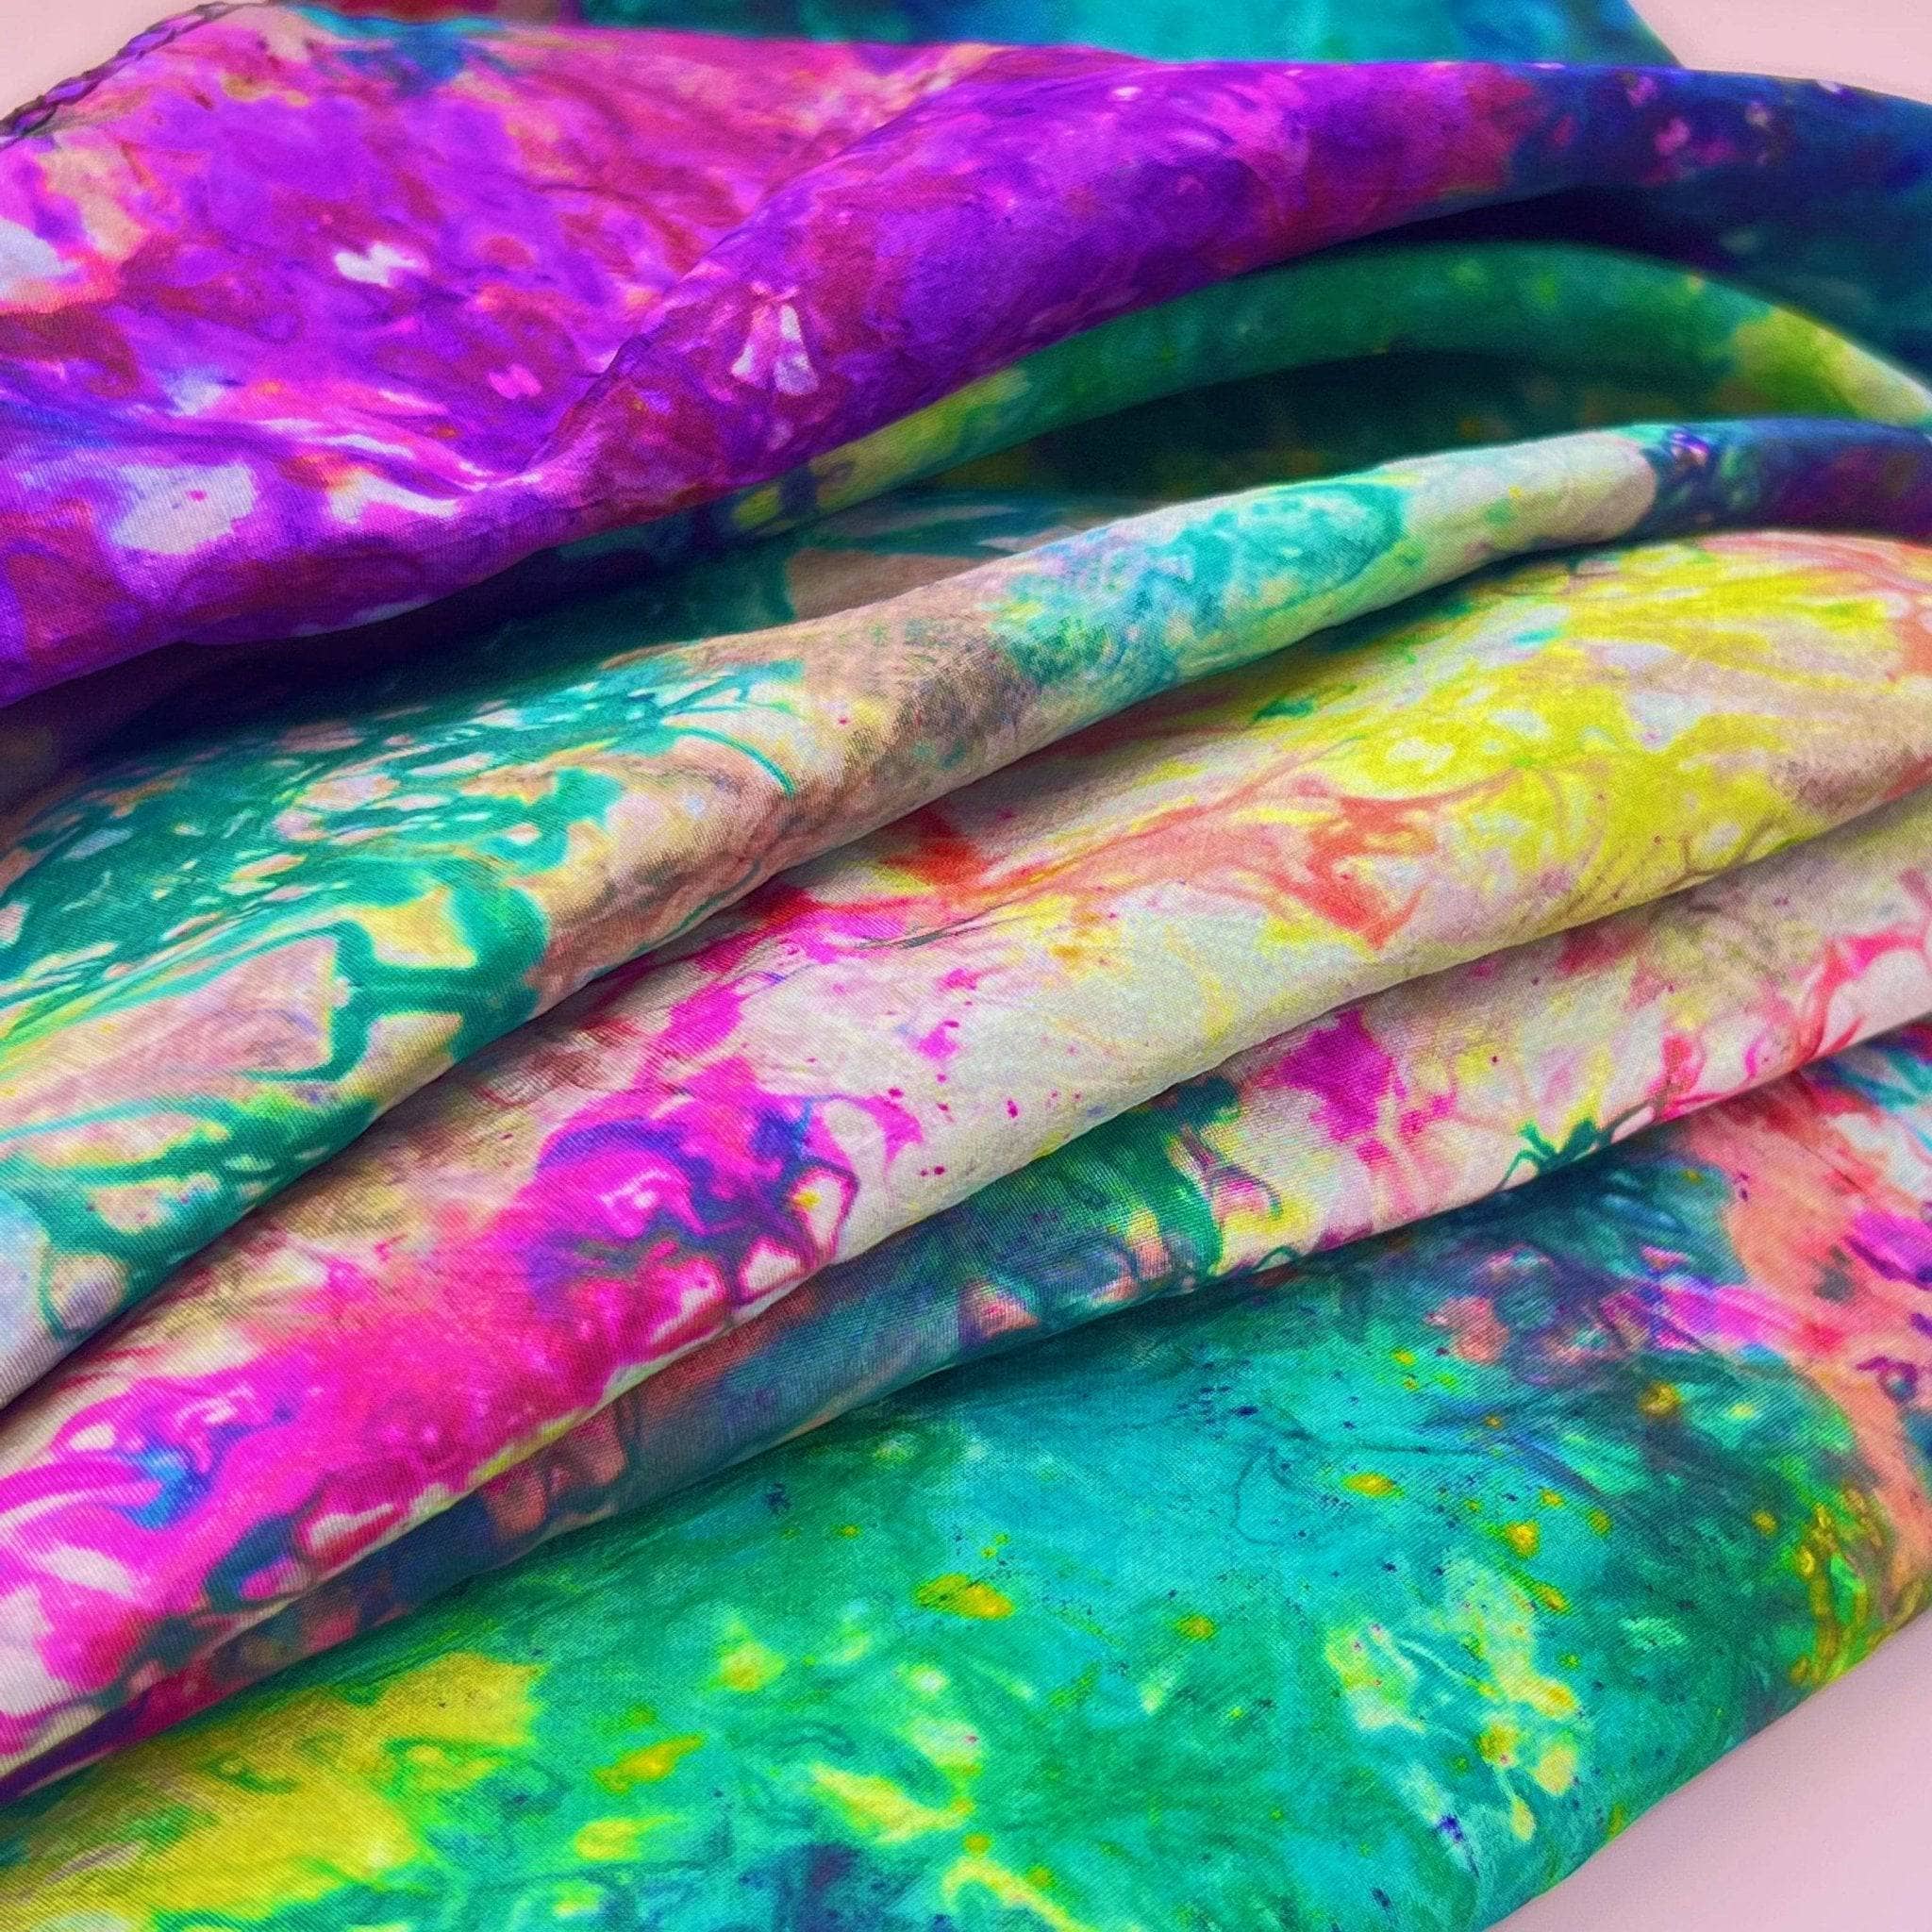 Mixed Assorted Embellished Sari Fabric Remnants Scraps 10 Pieces